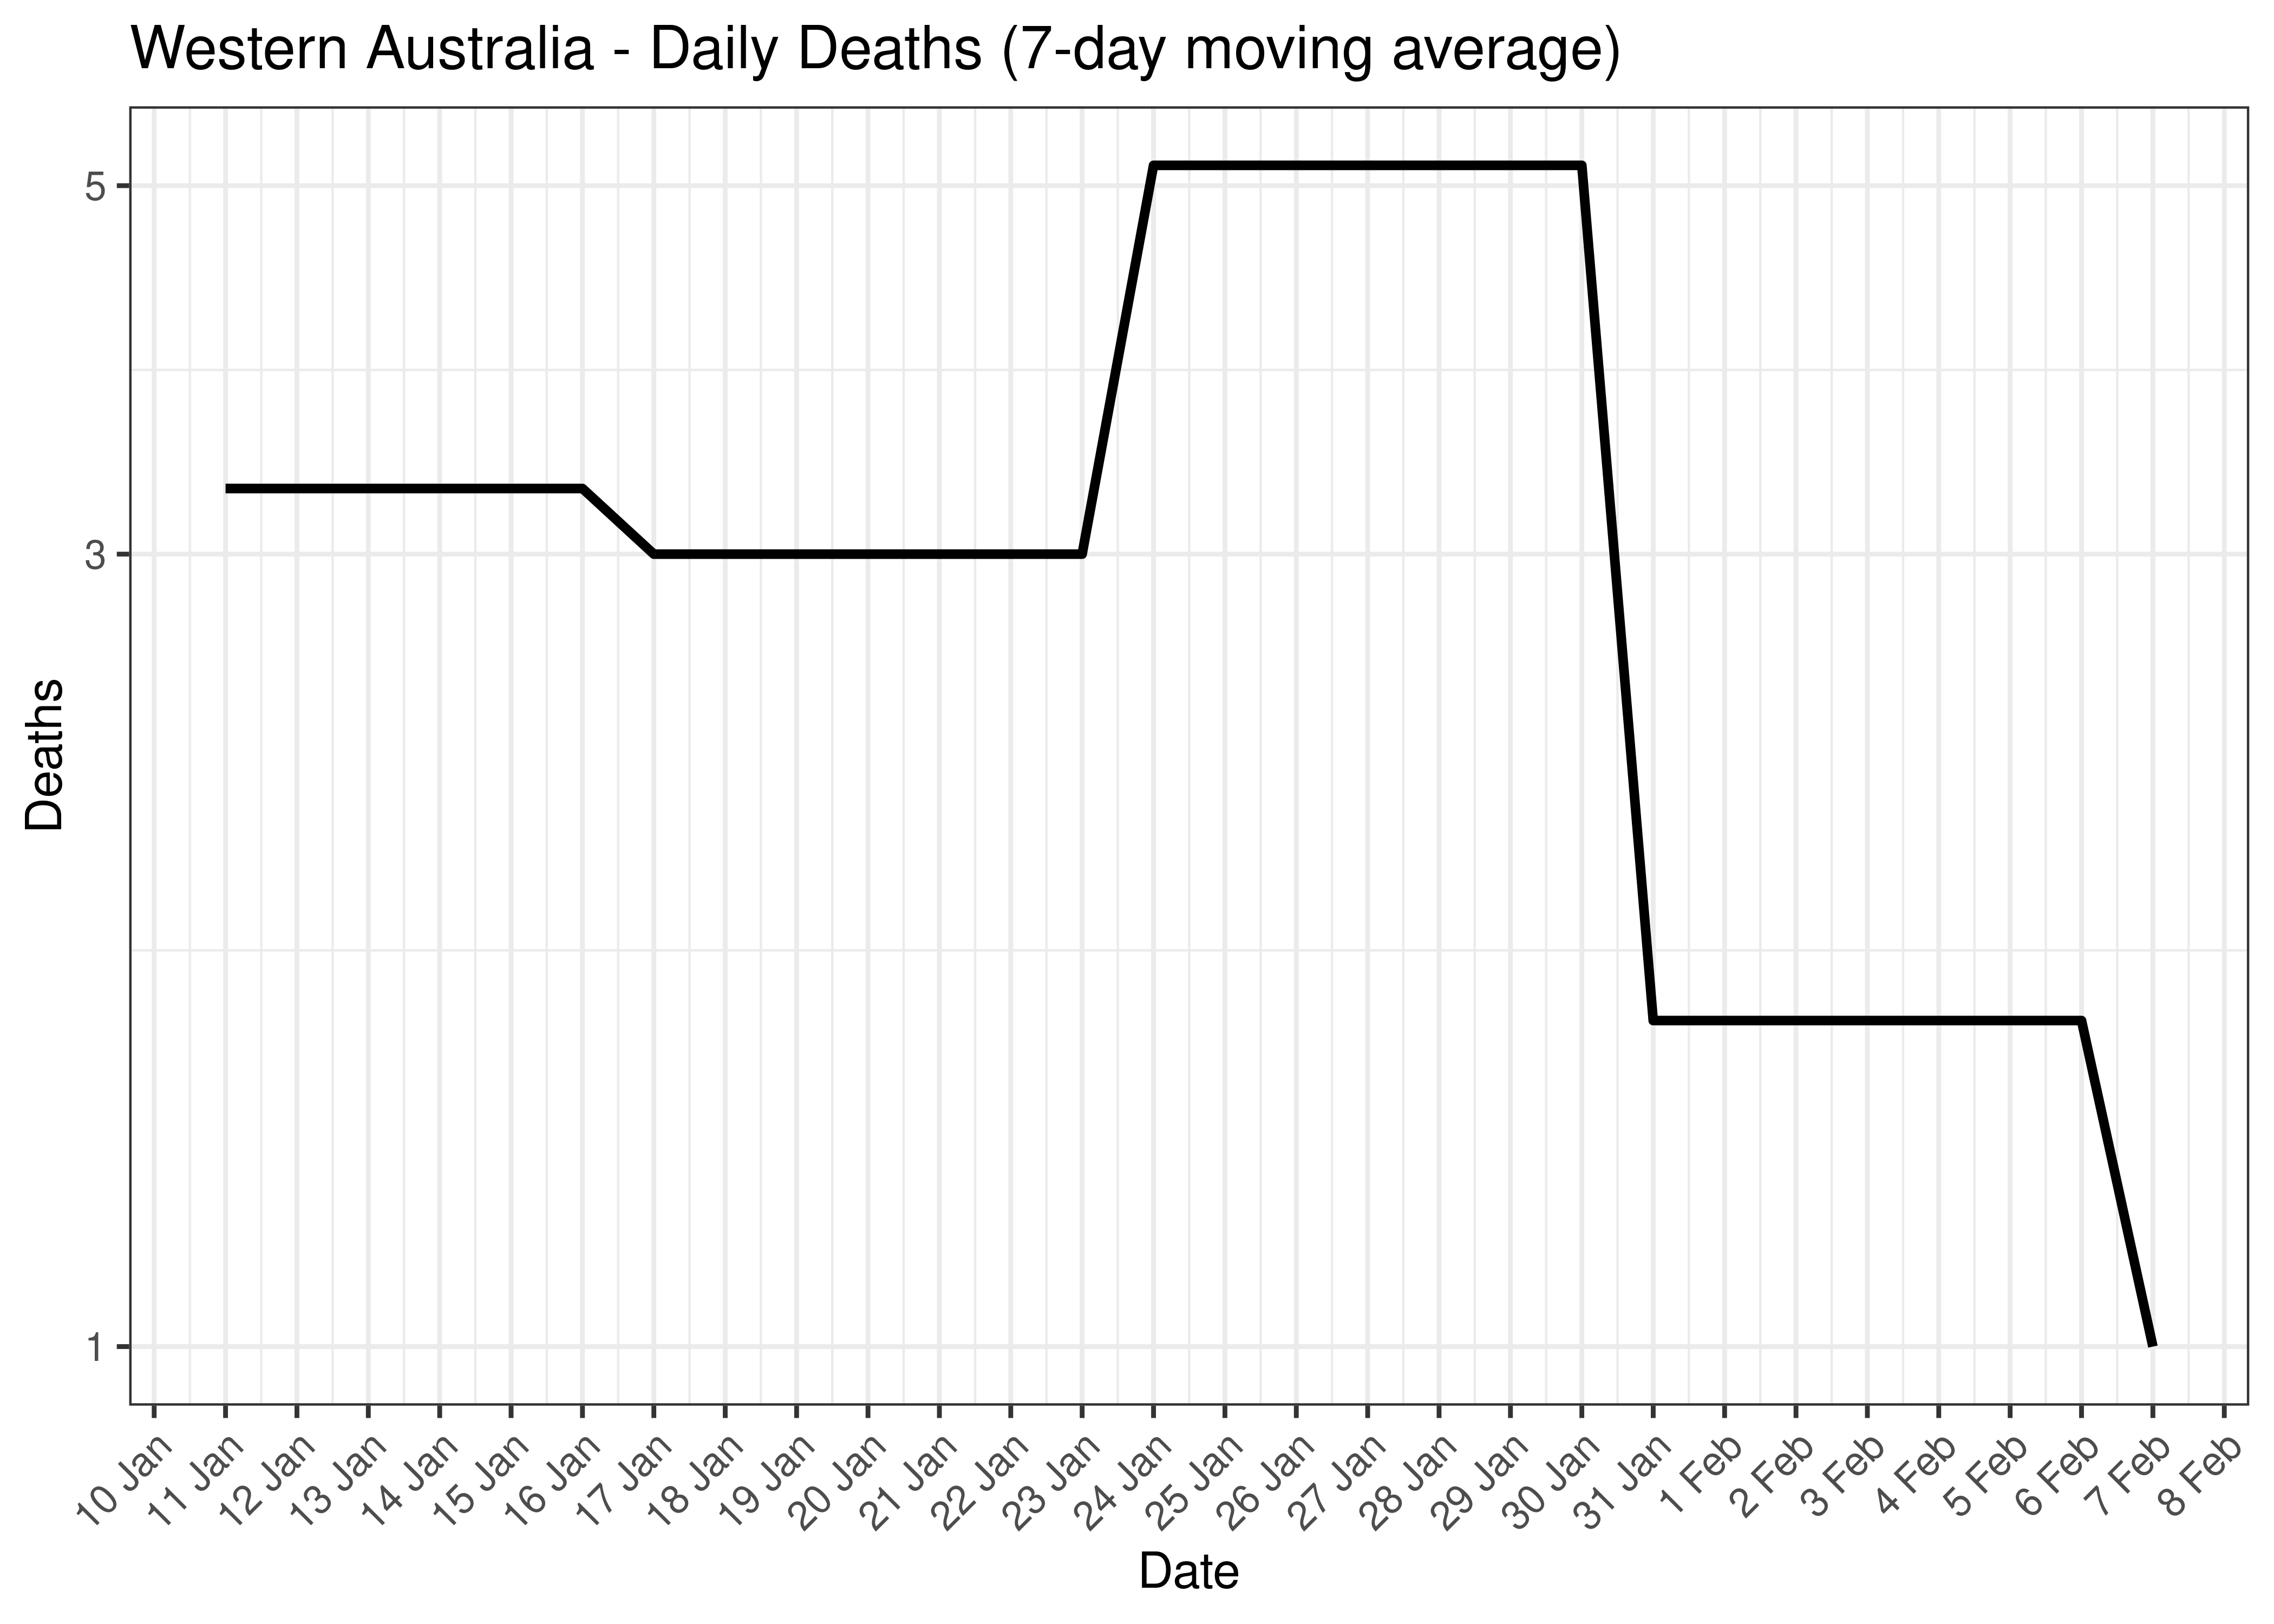 Western Australia - Percentage Testing Positive (7-day moving average)